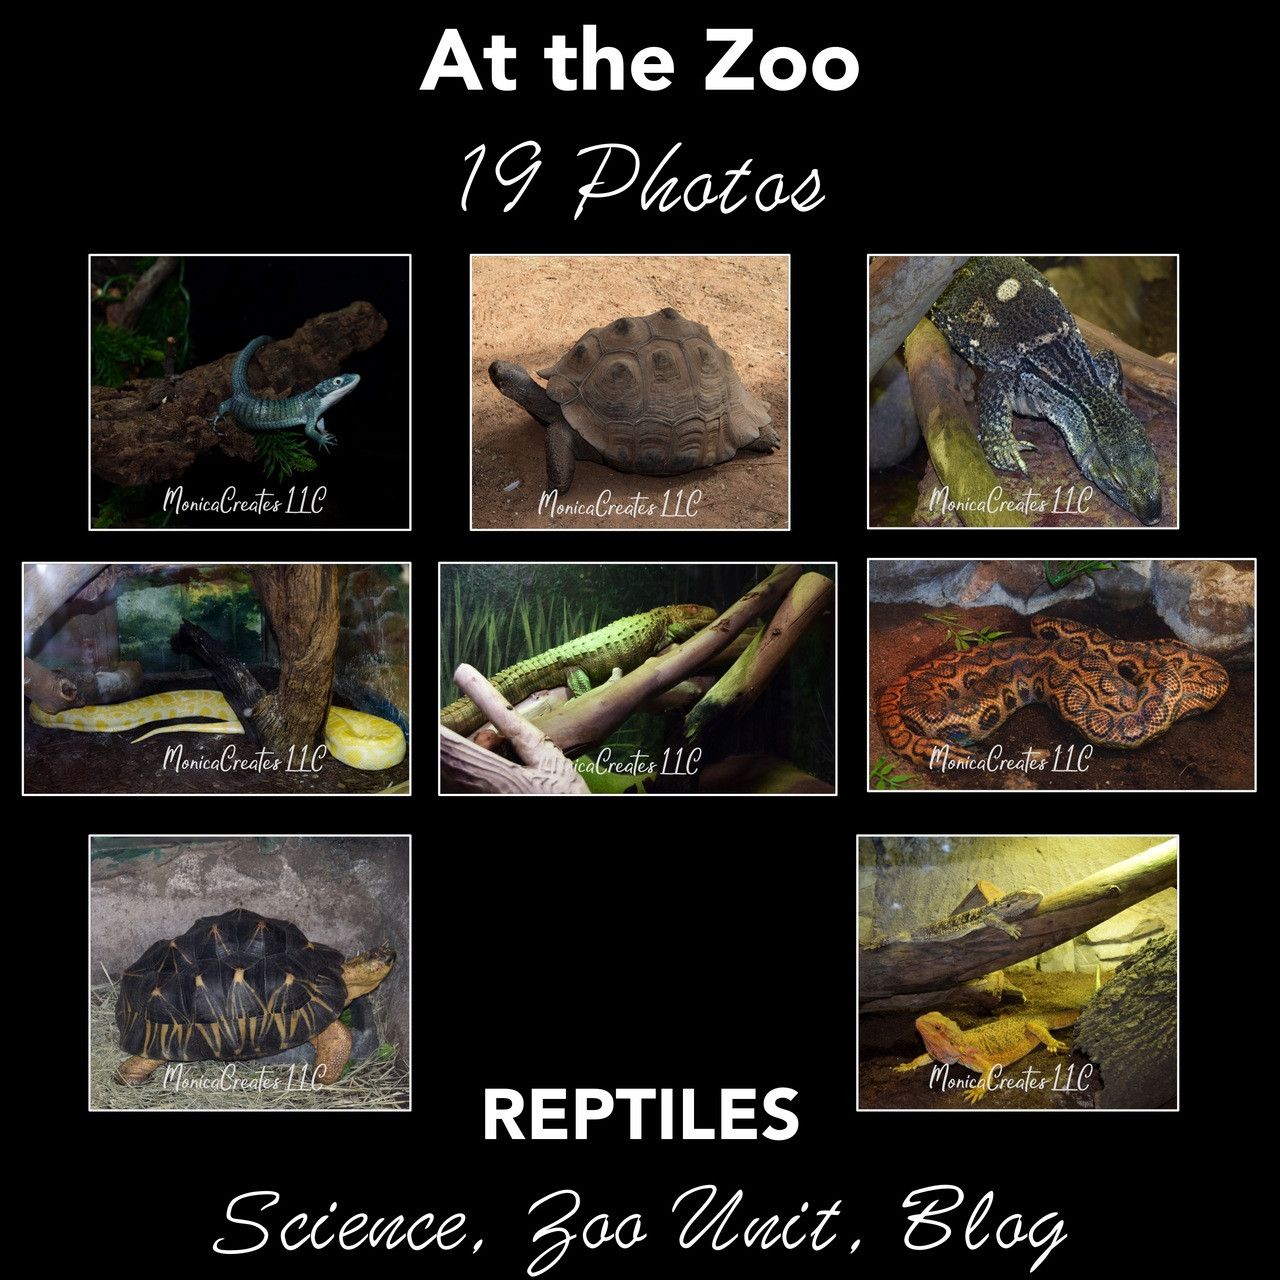 Stock Photos - Reptiles at the Zoo